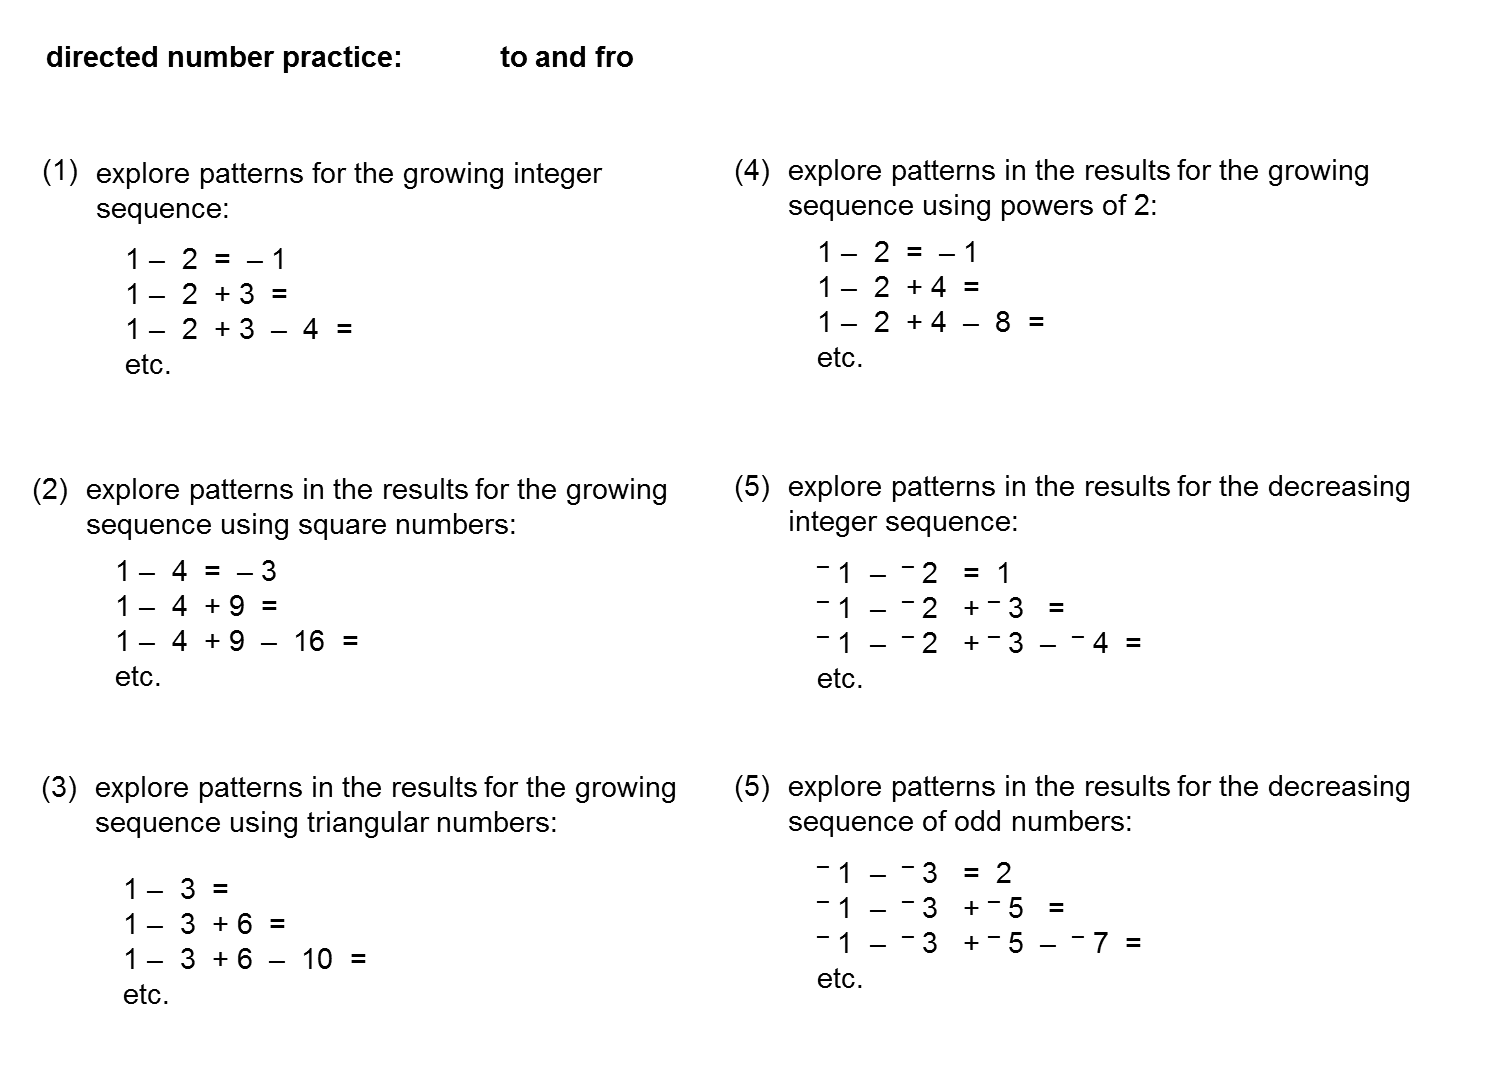 median-don-steward-mathematics-teaching-directed-number-practice